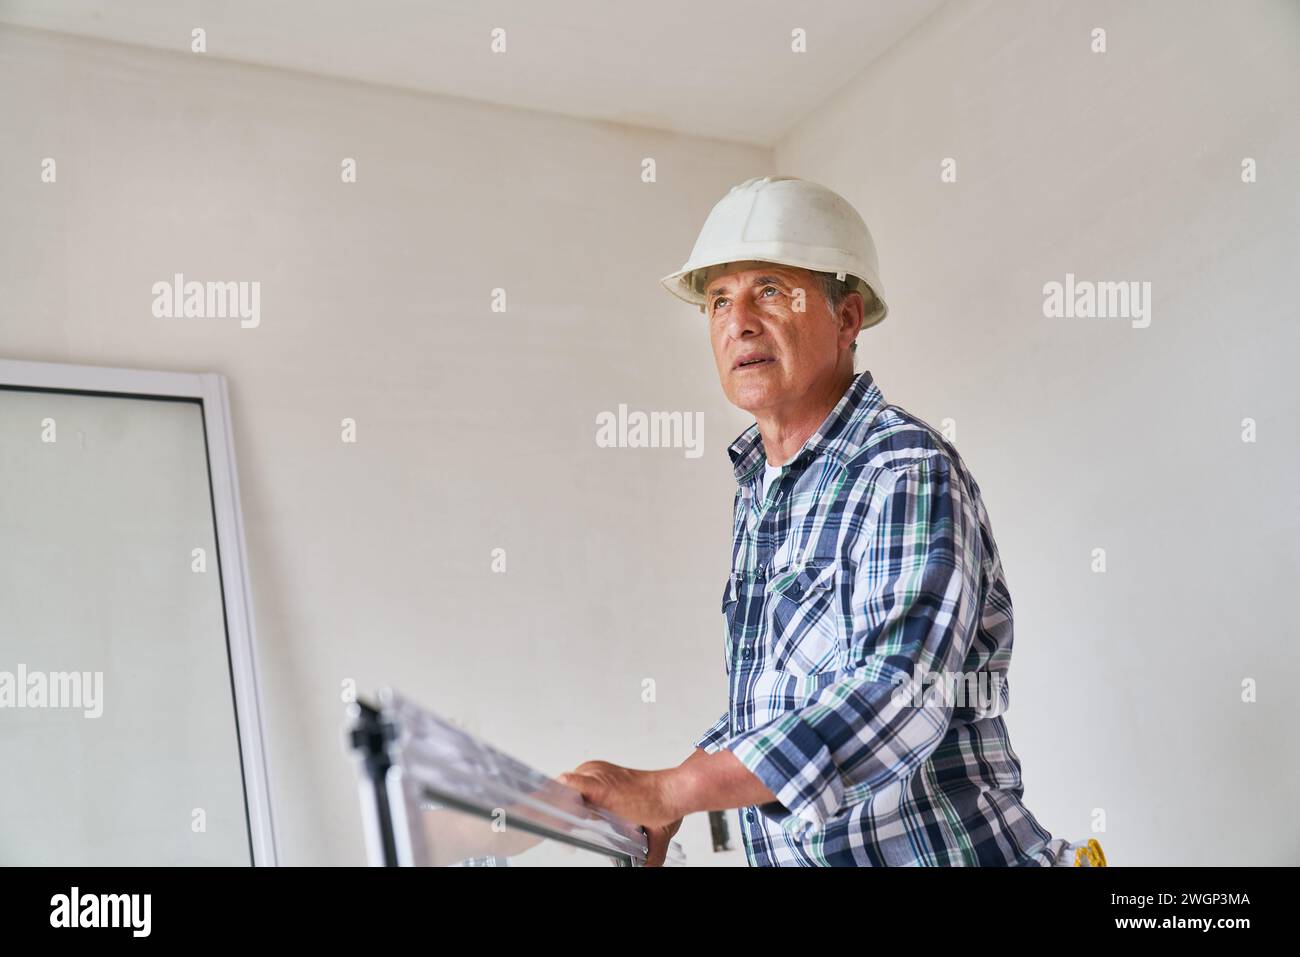 Senior male carpenter standing with window frame Stock Photo